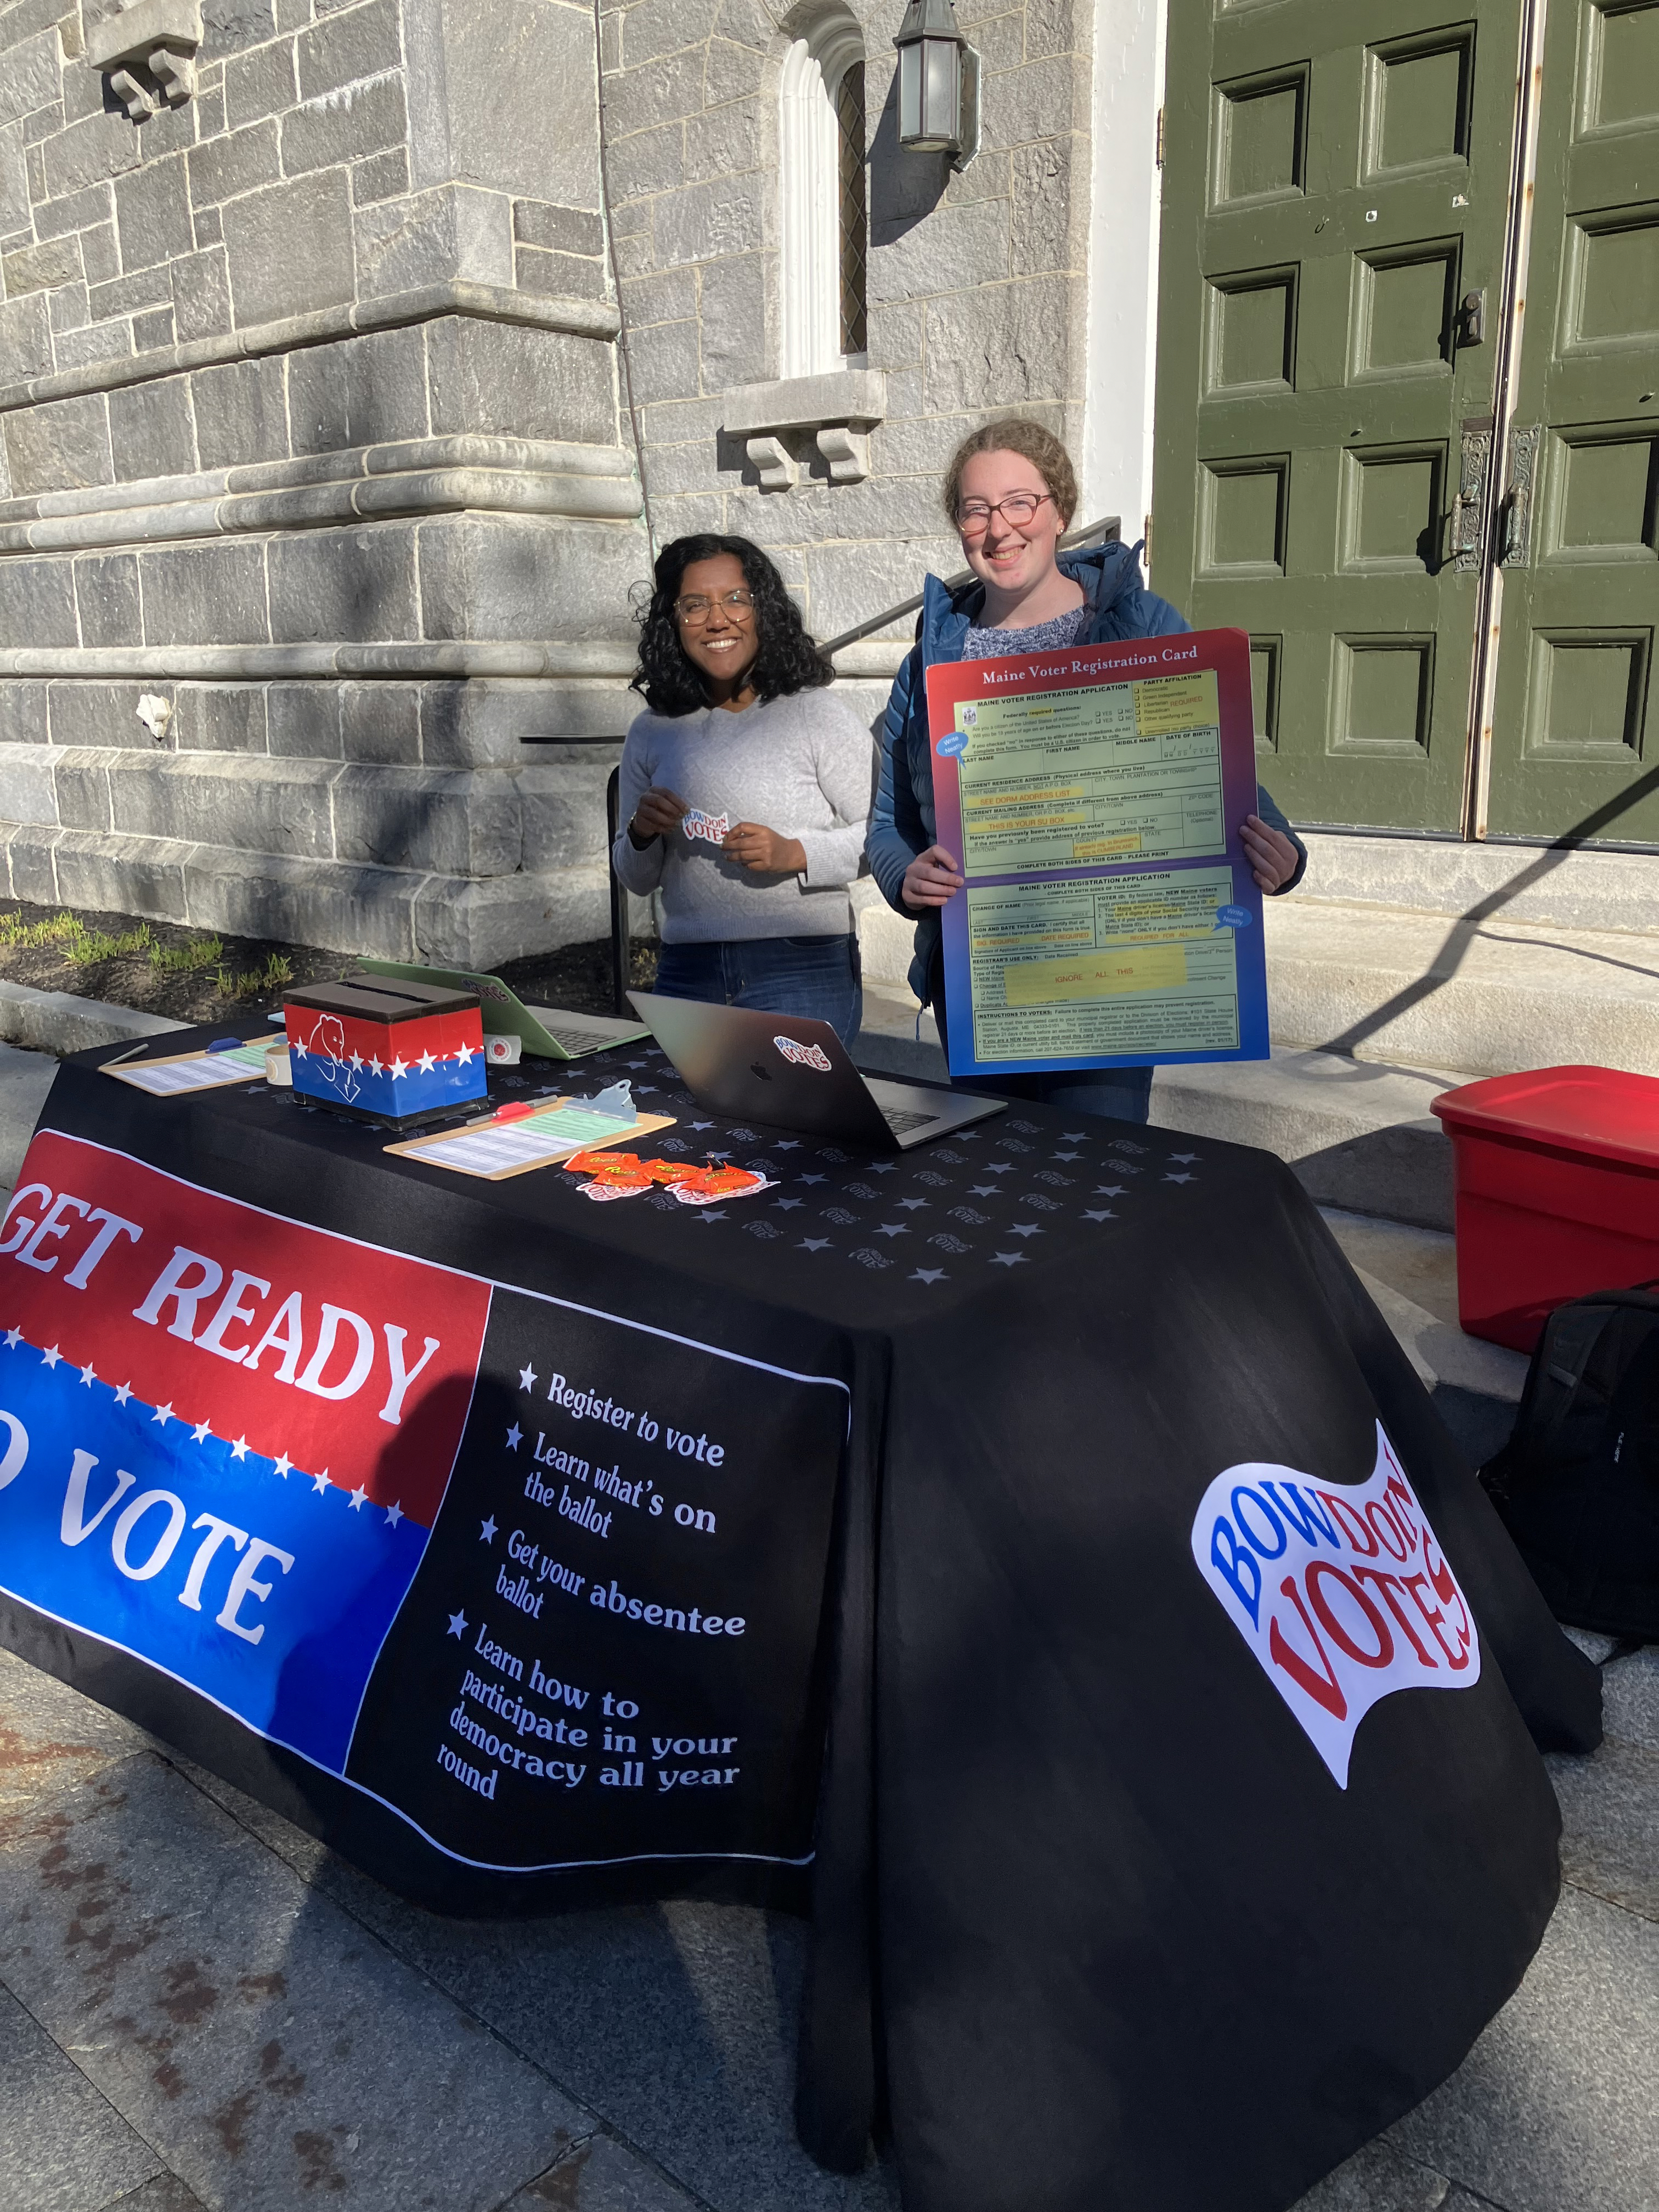 Student volunteers helping students register to vote